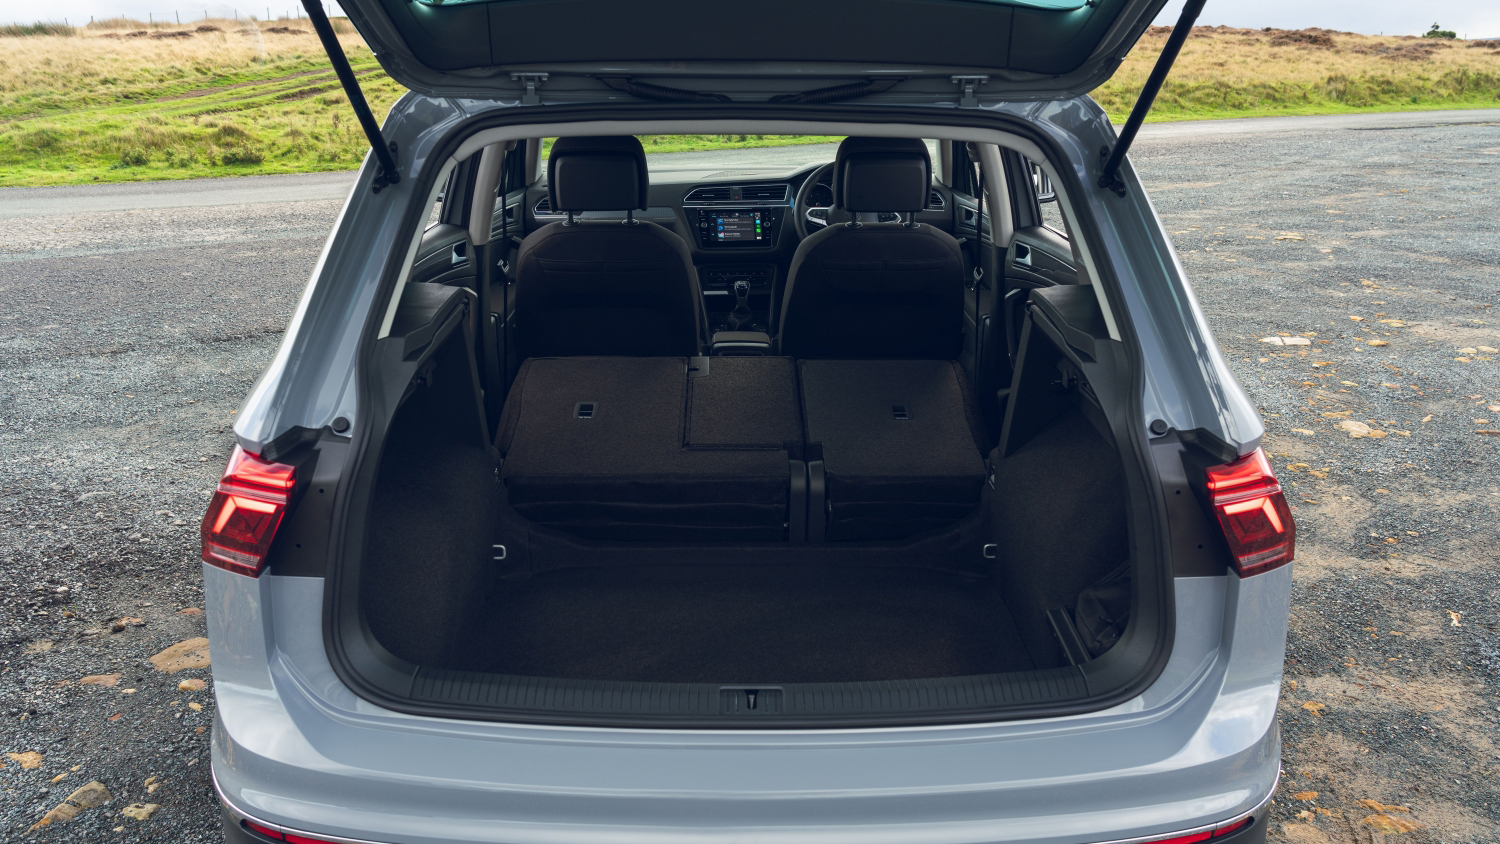 Volkswagen Tiguan Interior Layout & Technology | Top Gear